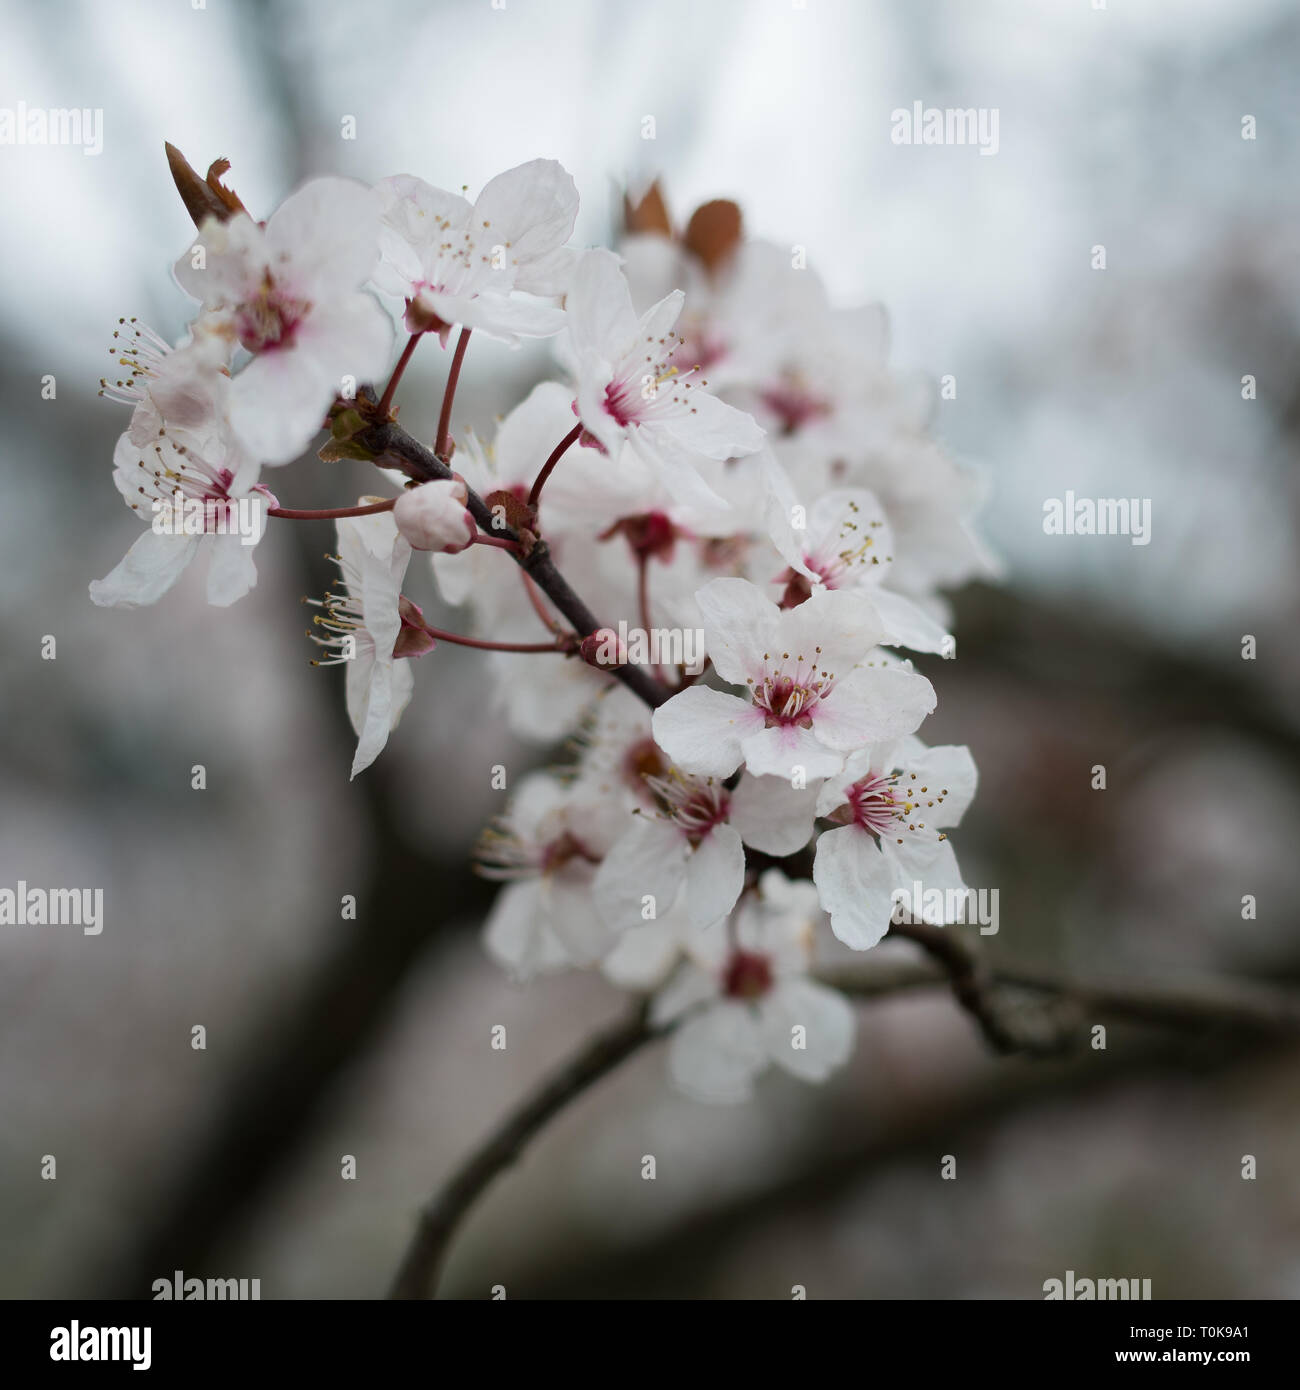 Cherry blossoms, Prunus padus, delicate fruit tree flowers in London, United Kingdom Stock Photo